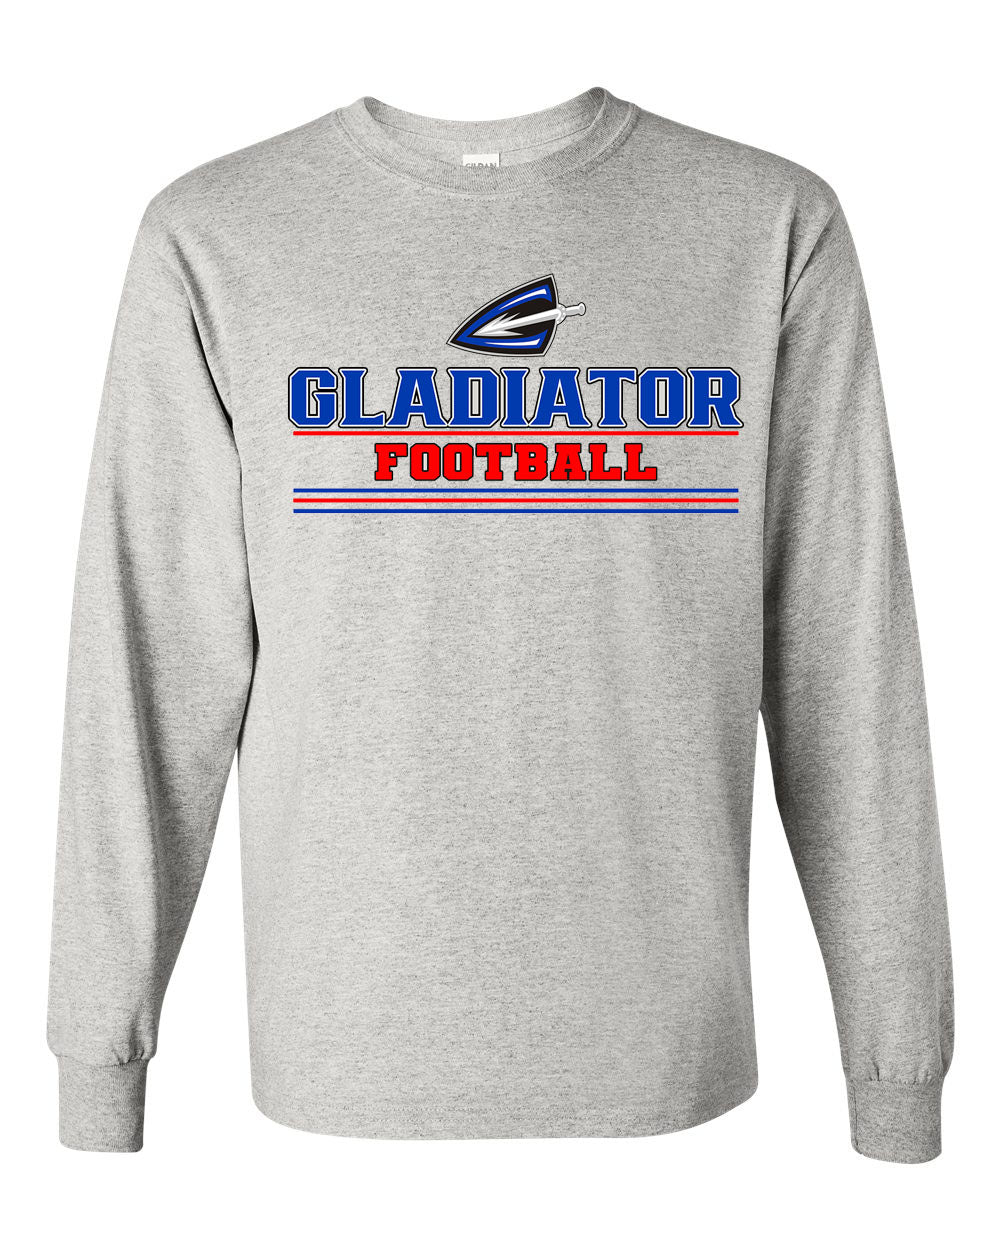 Gladiator Football Design 4 Long Sleeve Shirt